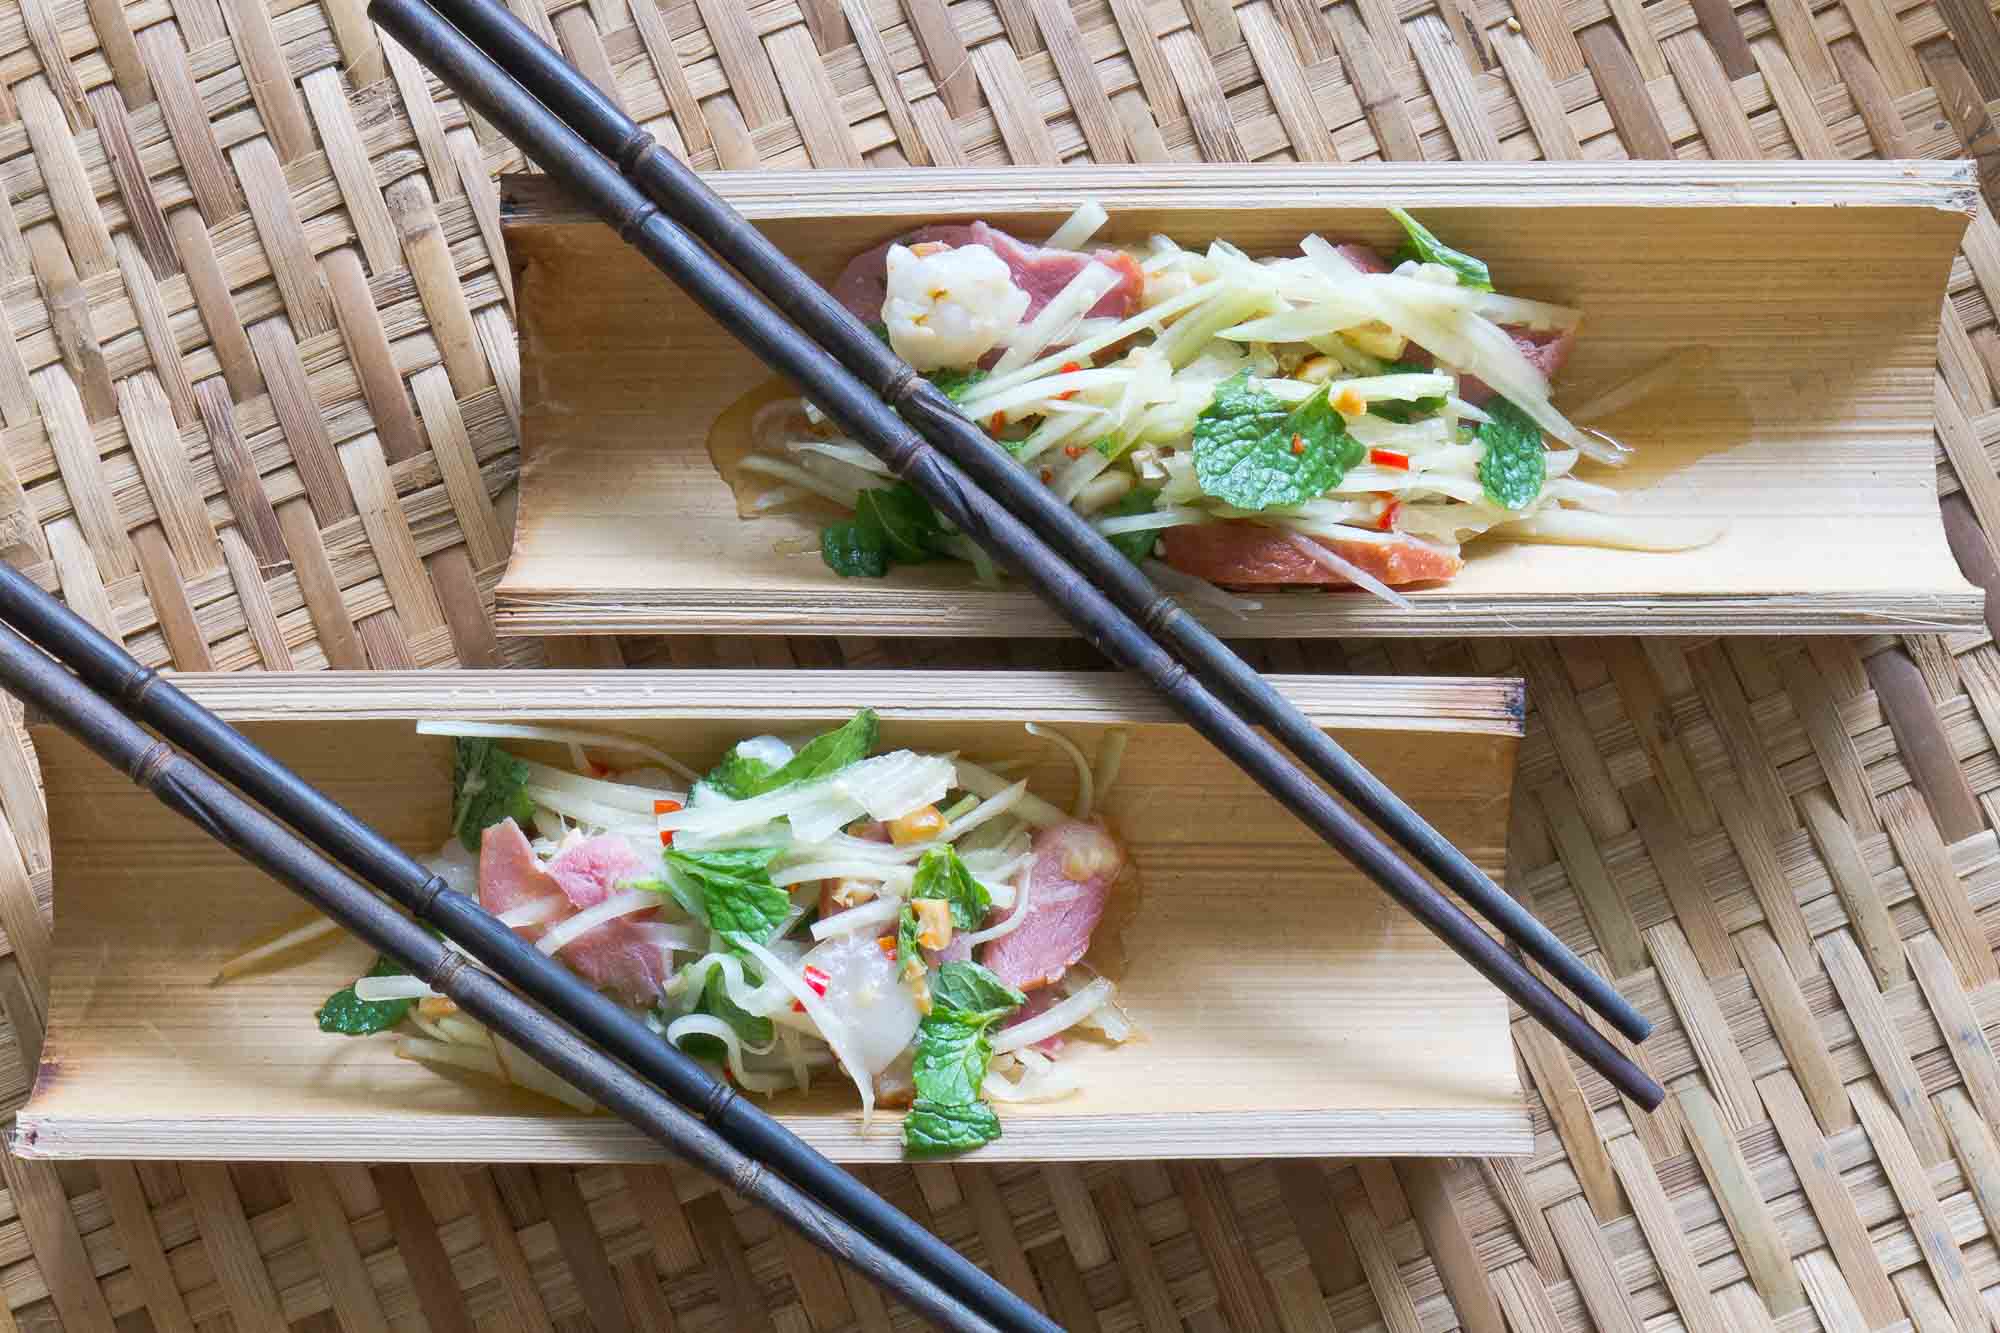 Asian tea-smoked duck salad presented on bamboo trays